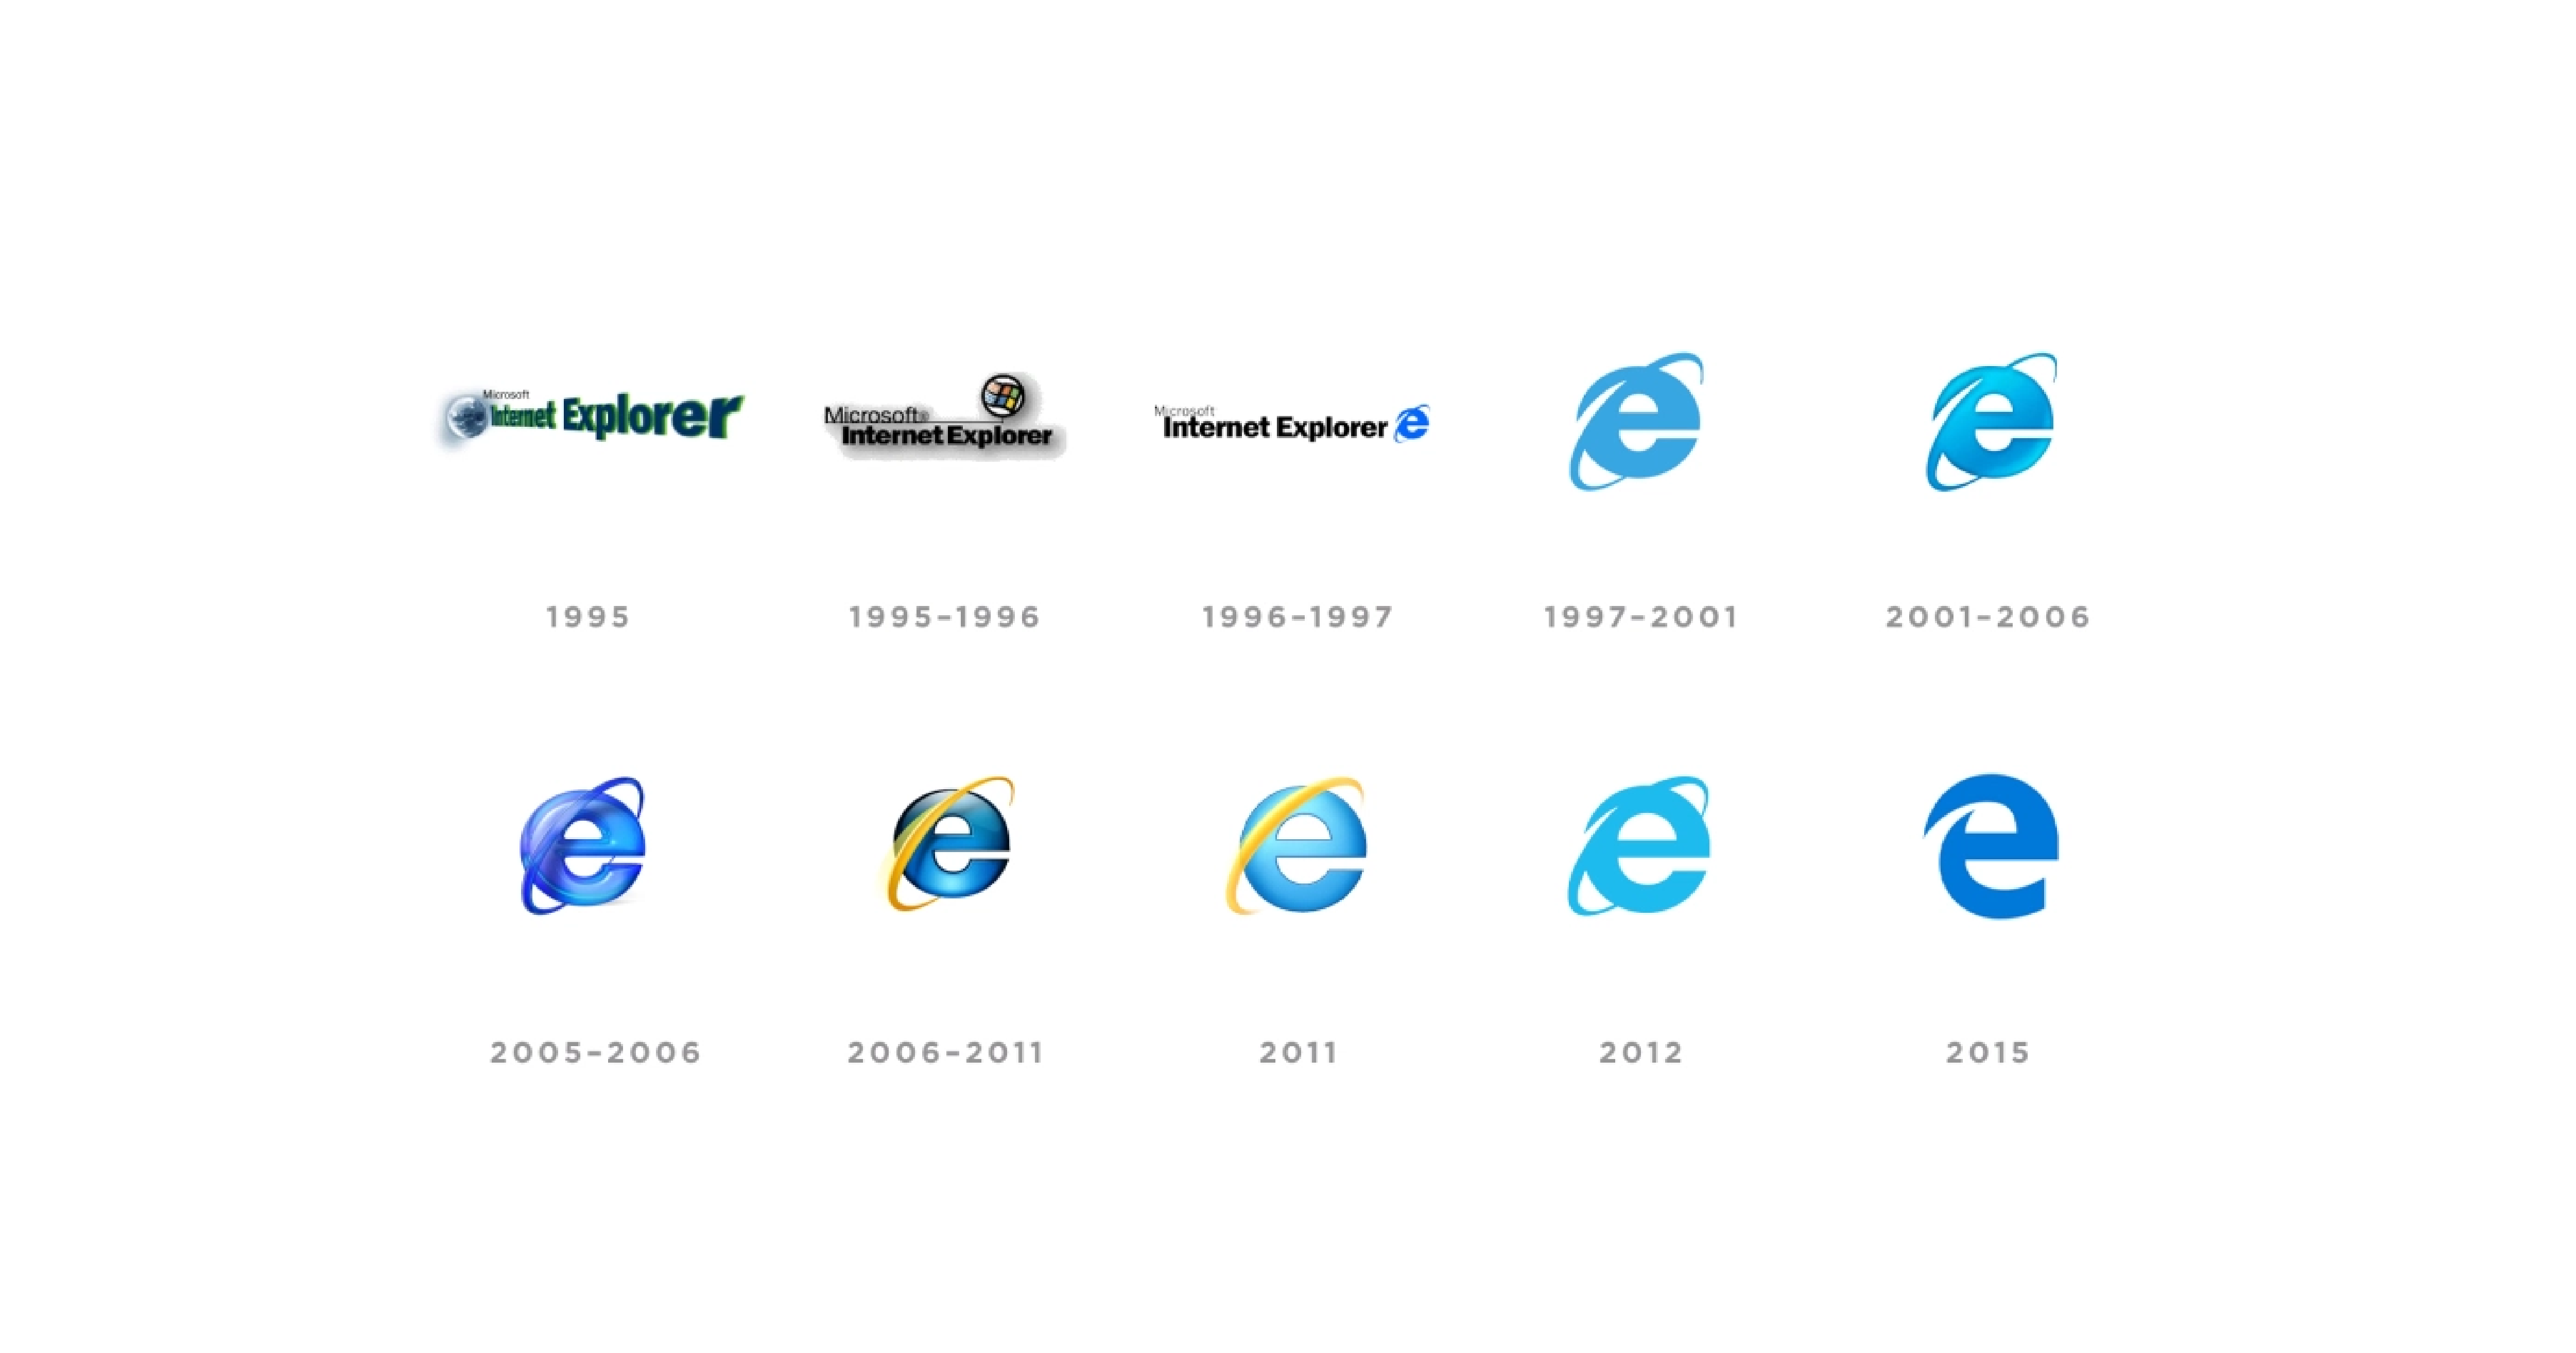 Thiết kế logo Internet Explorer qua từng thời kỳ 